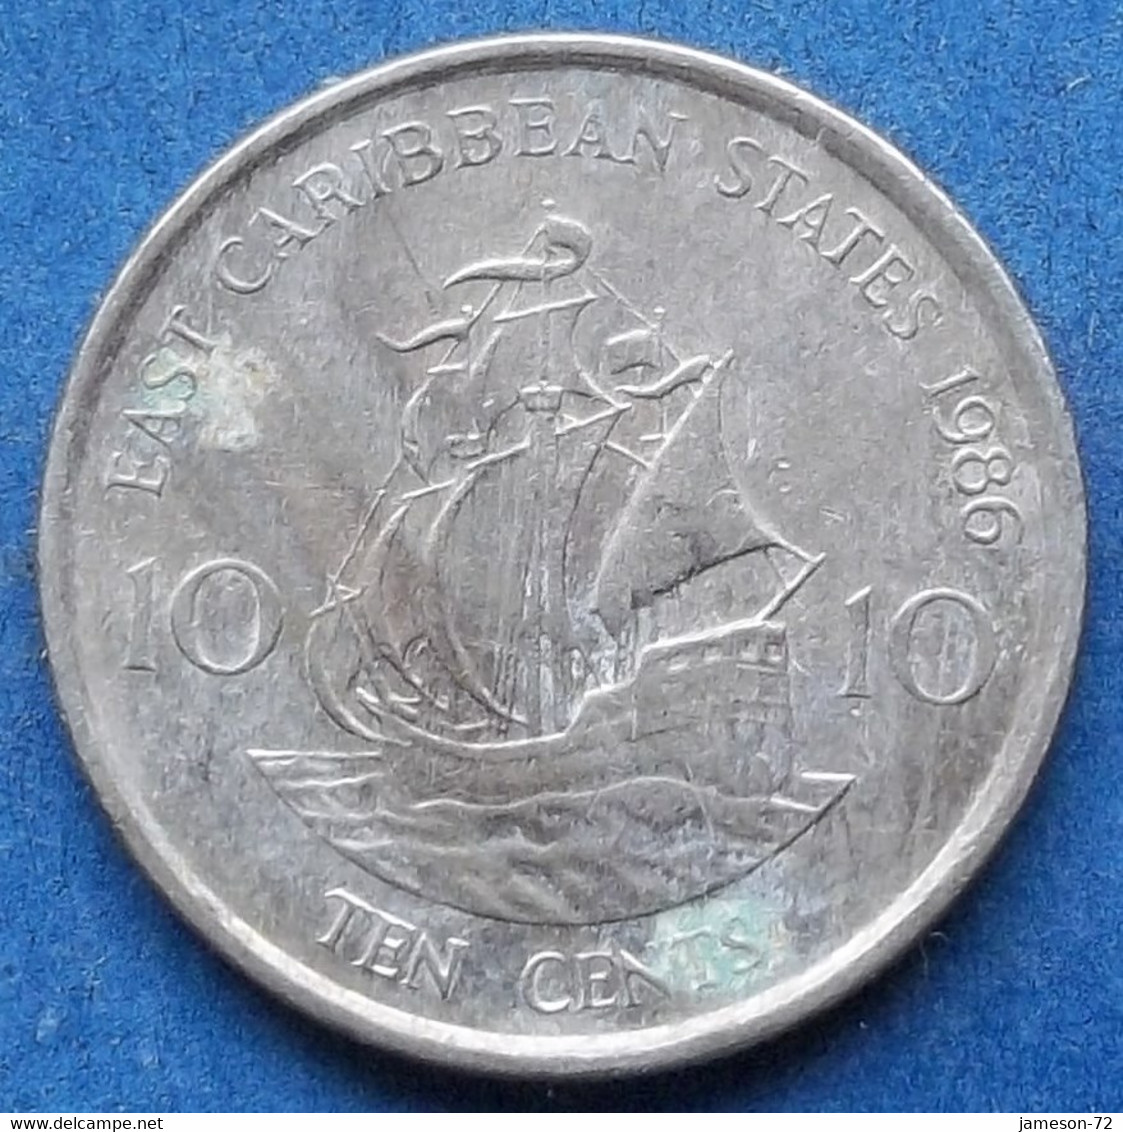 EAST CARIBBEAN STATES - 10 Cents 1986 KM# 13 - Edelweiss Coins - Caraibi Orientali (Stati Dei)